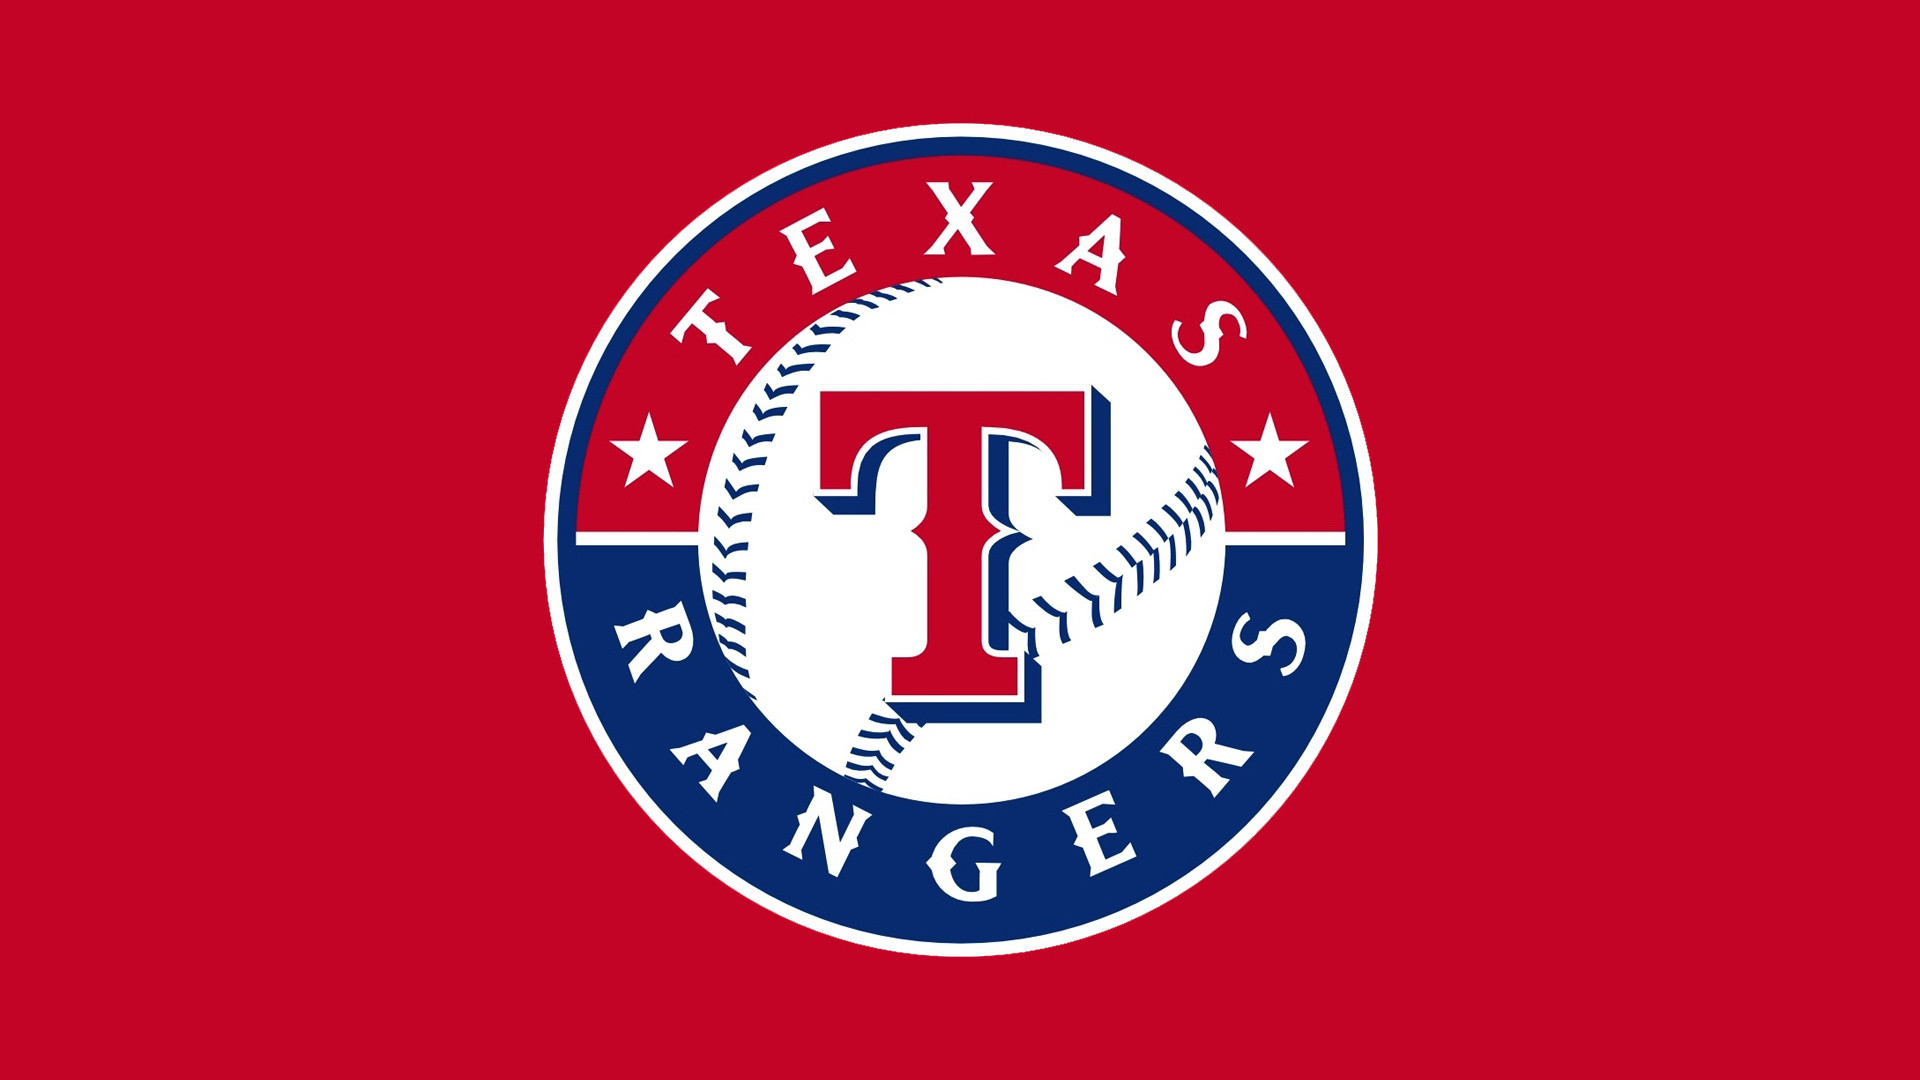 1920x1080 Free Download Texas Rangers Wallpaper